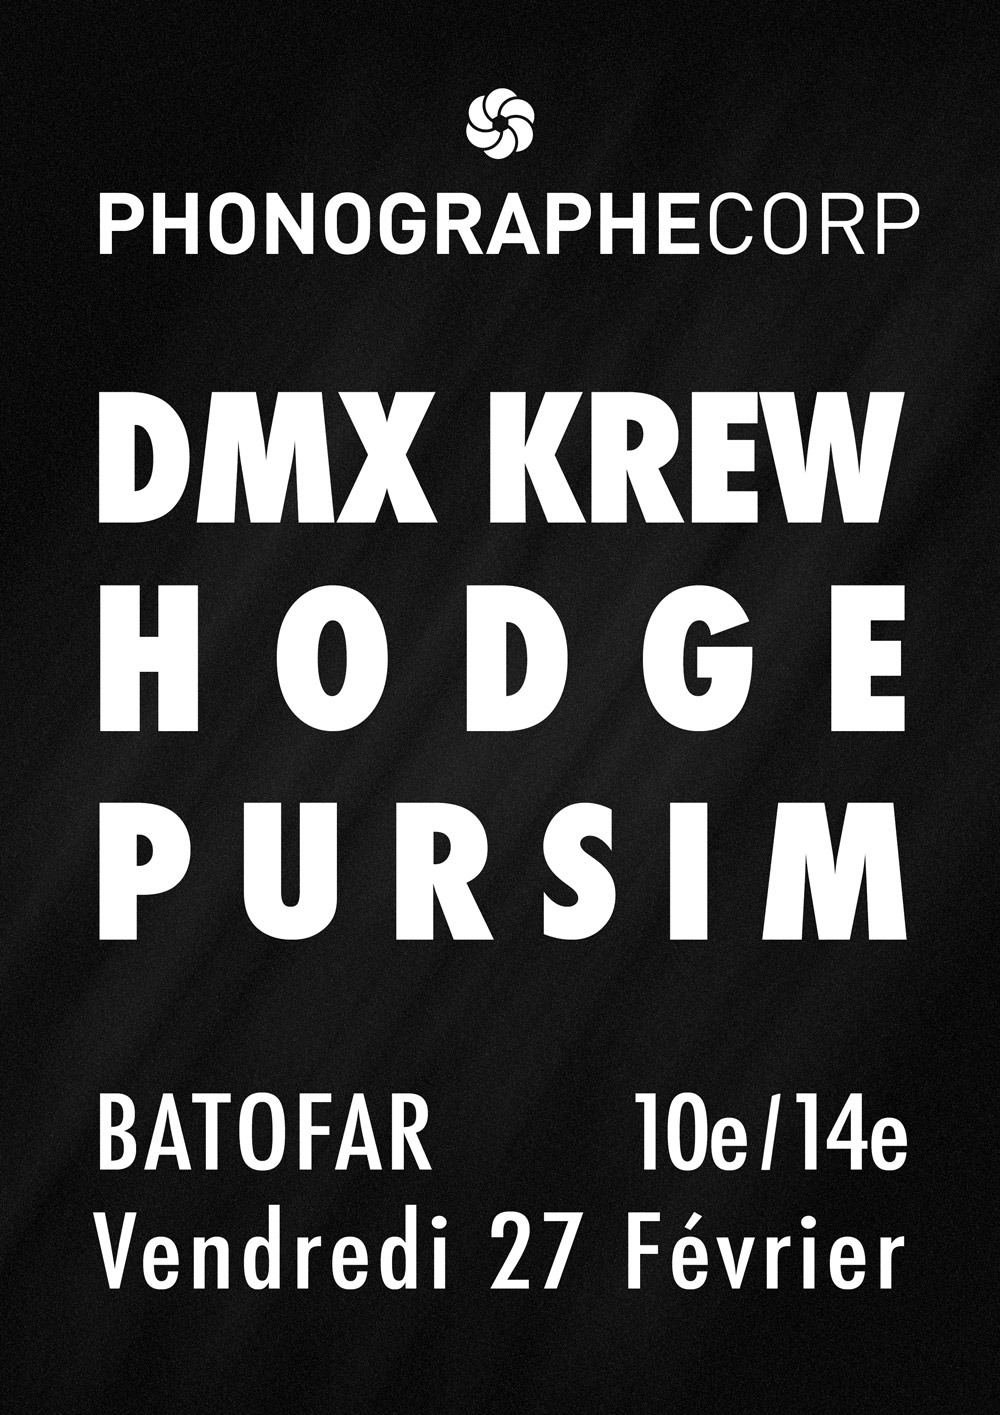 PHONOGRAPHE CORP présente DMX KREW, HODGE & PURSIM